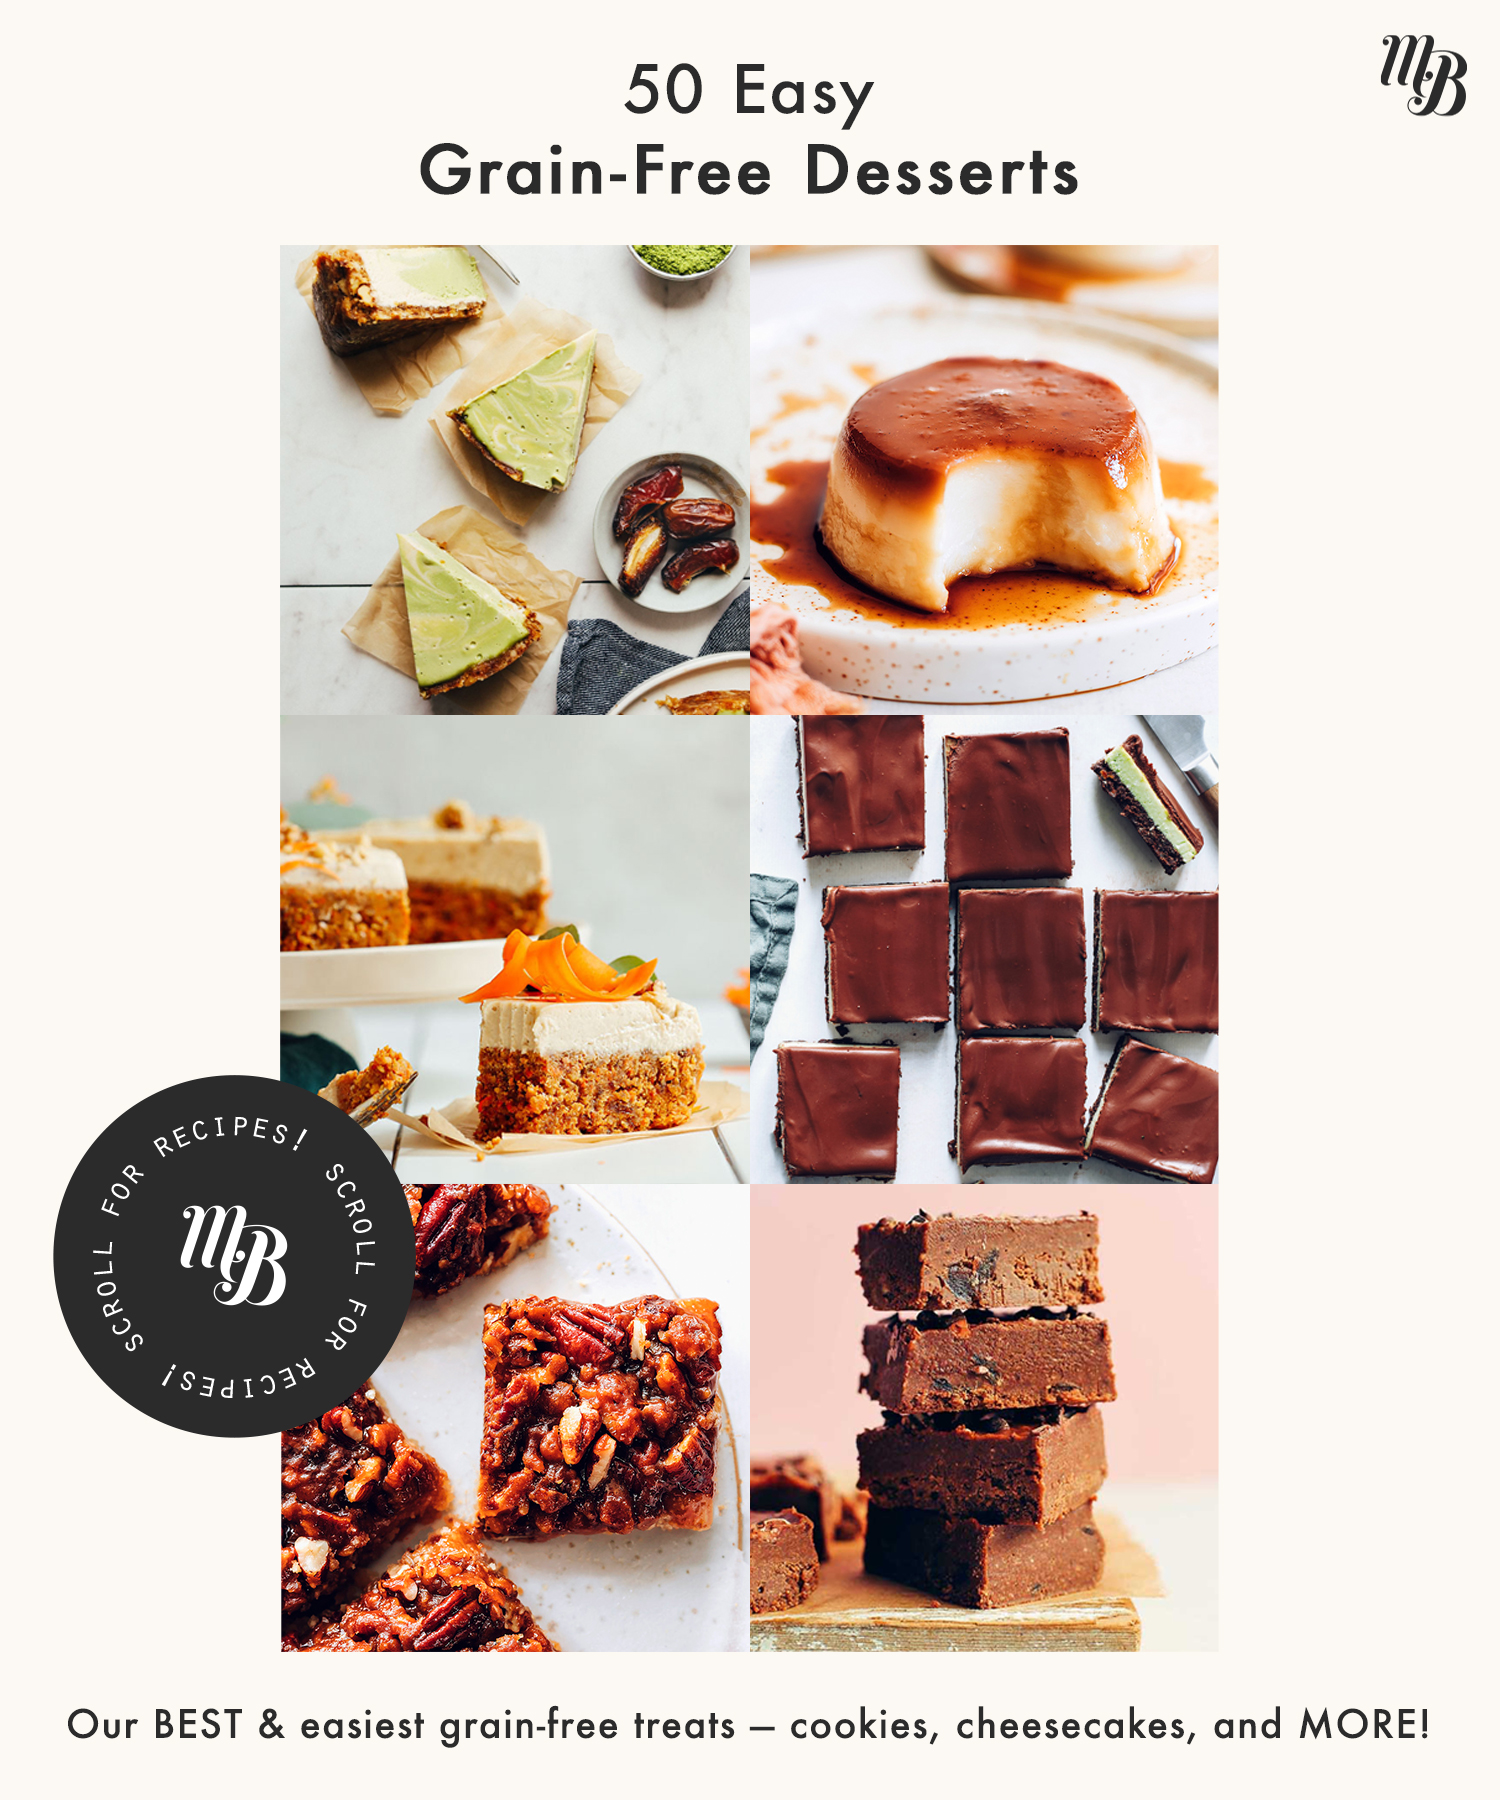 Assortment of grain-free dessert recipes